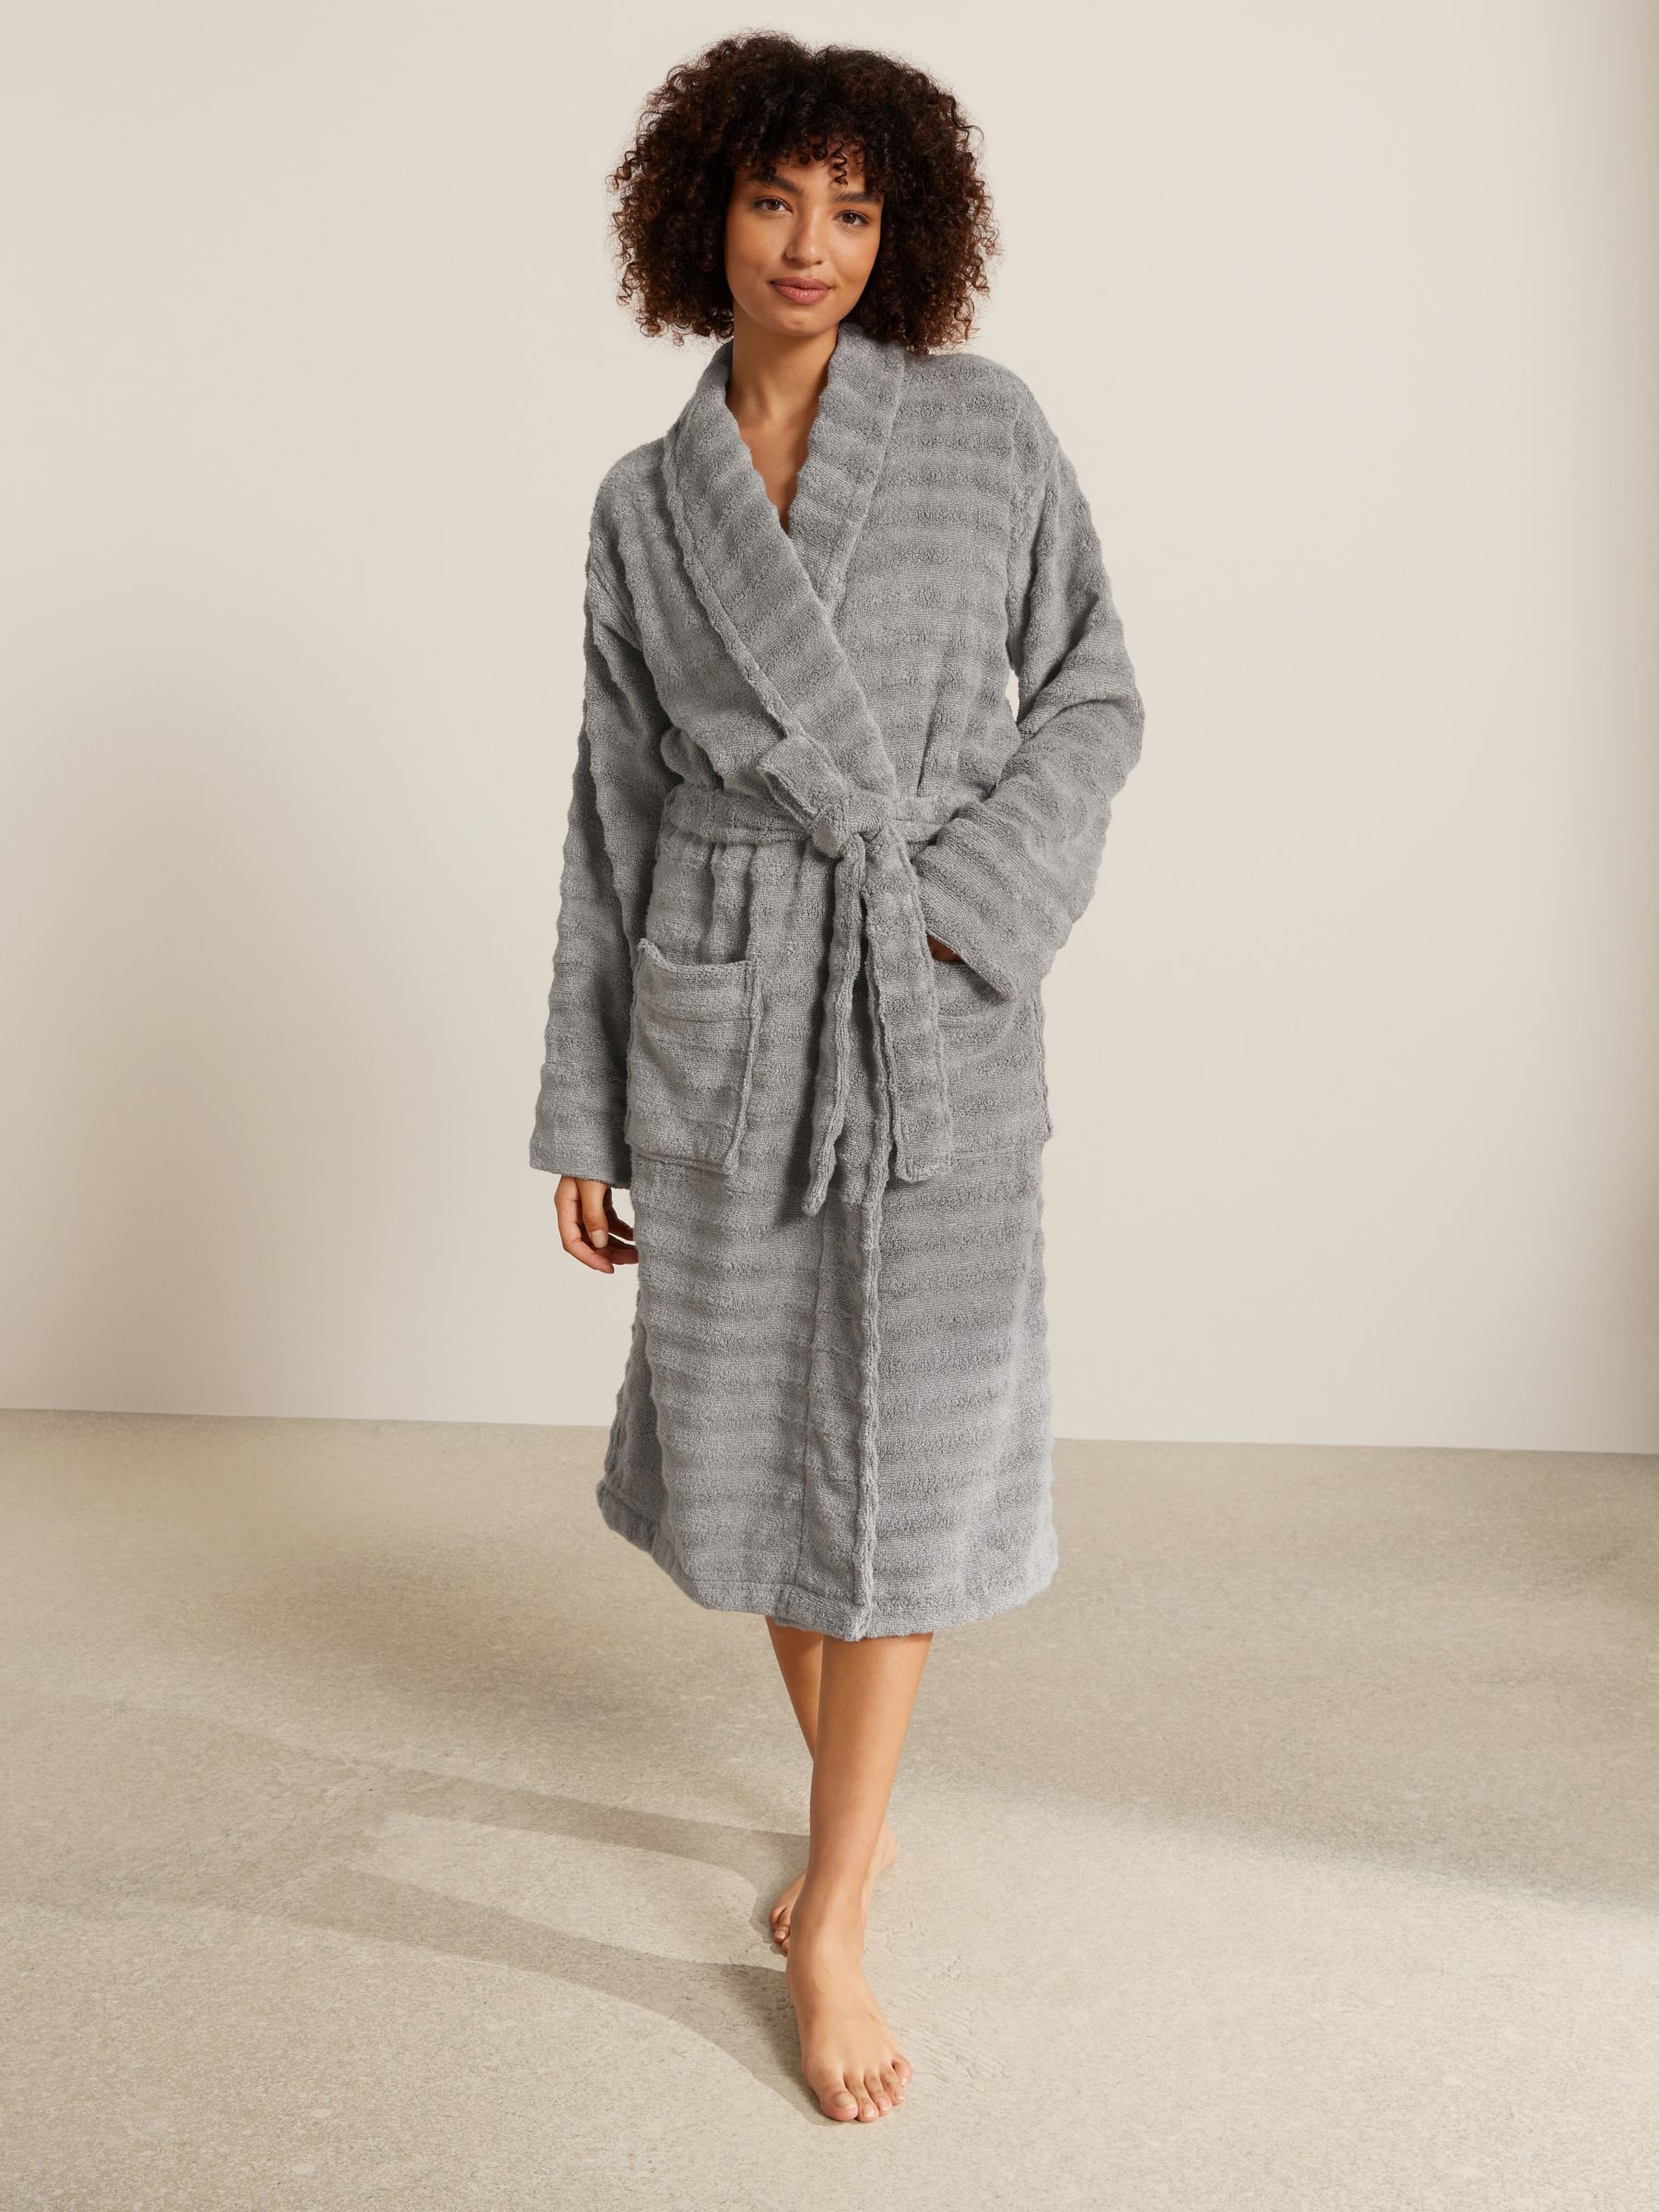 John Lewis & Partners Luxury Spa Unisex Bath Robe, Dove Grey, S-M